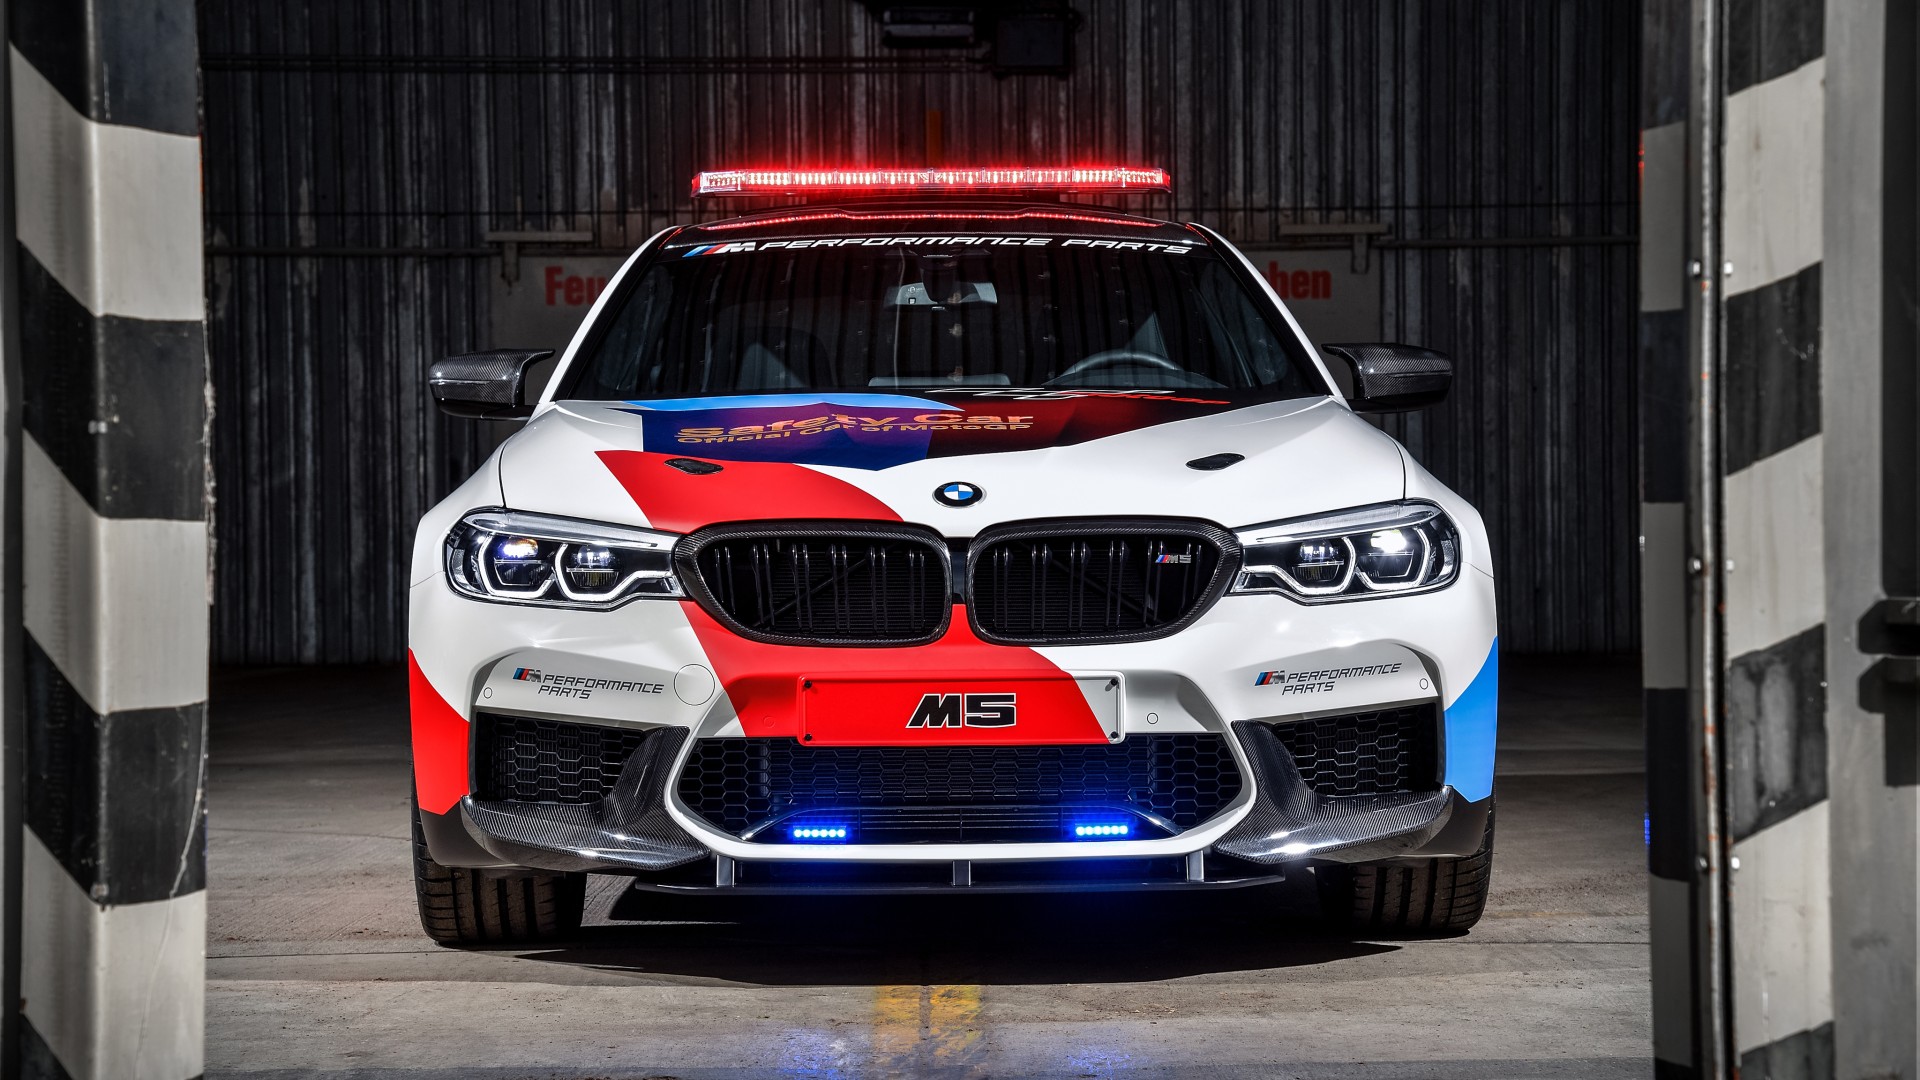 2018 BMW M5 MotoGP Safety Car 4K Wallpaper | HD Car Wallpapers | ID #8991